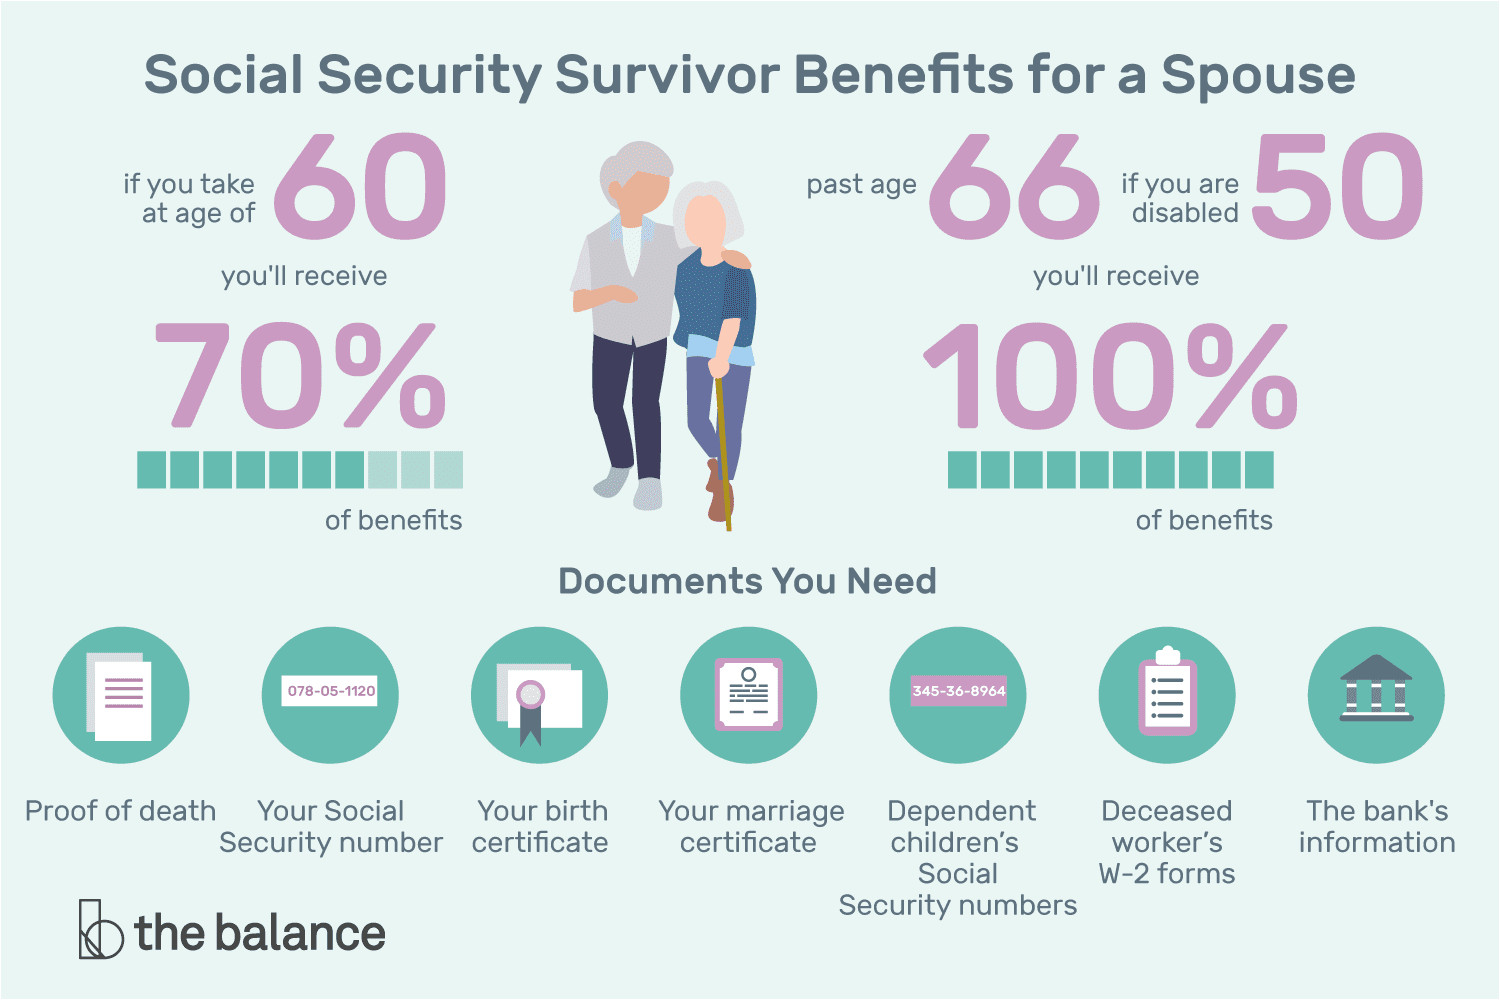 social security survivor benefits for a spouse 2388918 v3 5bc644f846e0fb0026f5c3e2 png